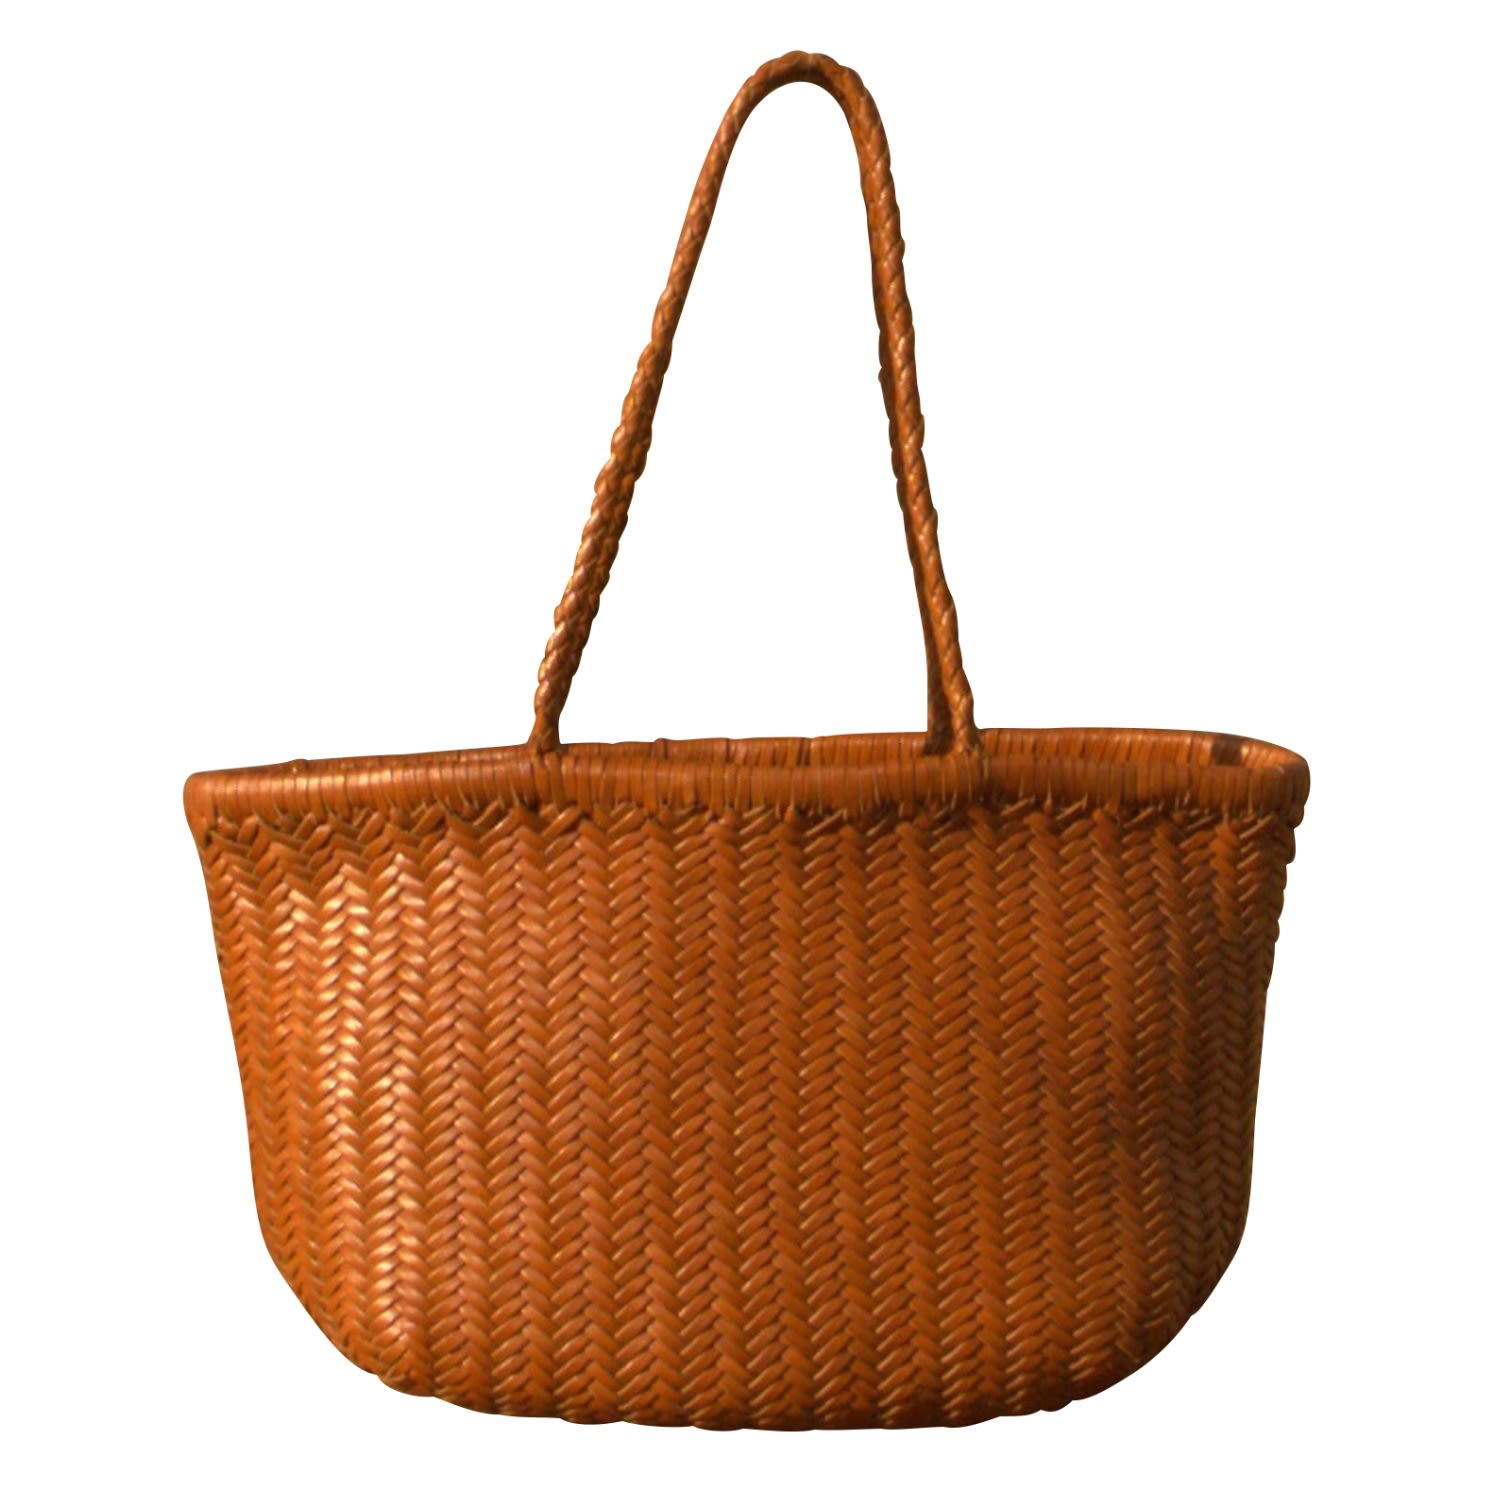 Women’s Brown Zigzag Woven Leather Handbag ’Viviana’ Medium Size - Tan Rimini